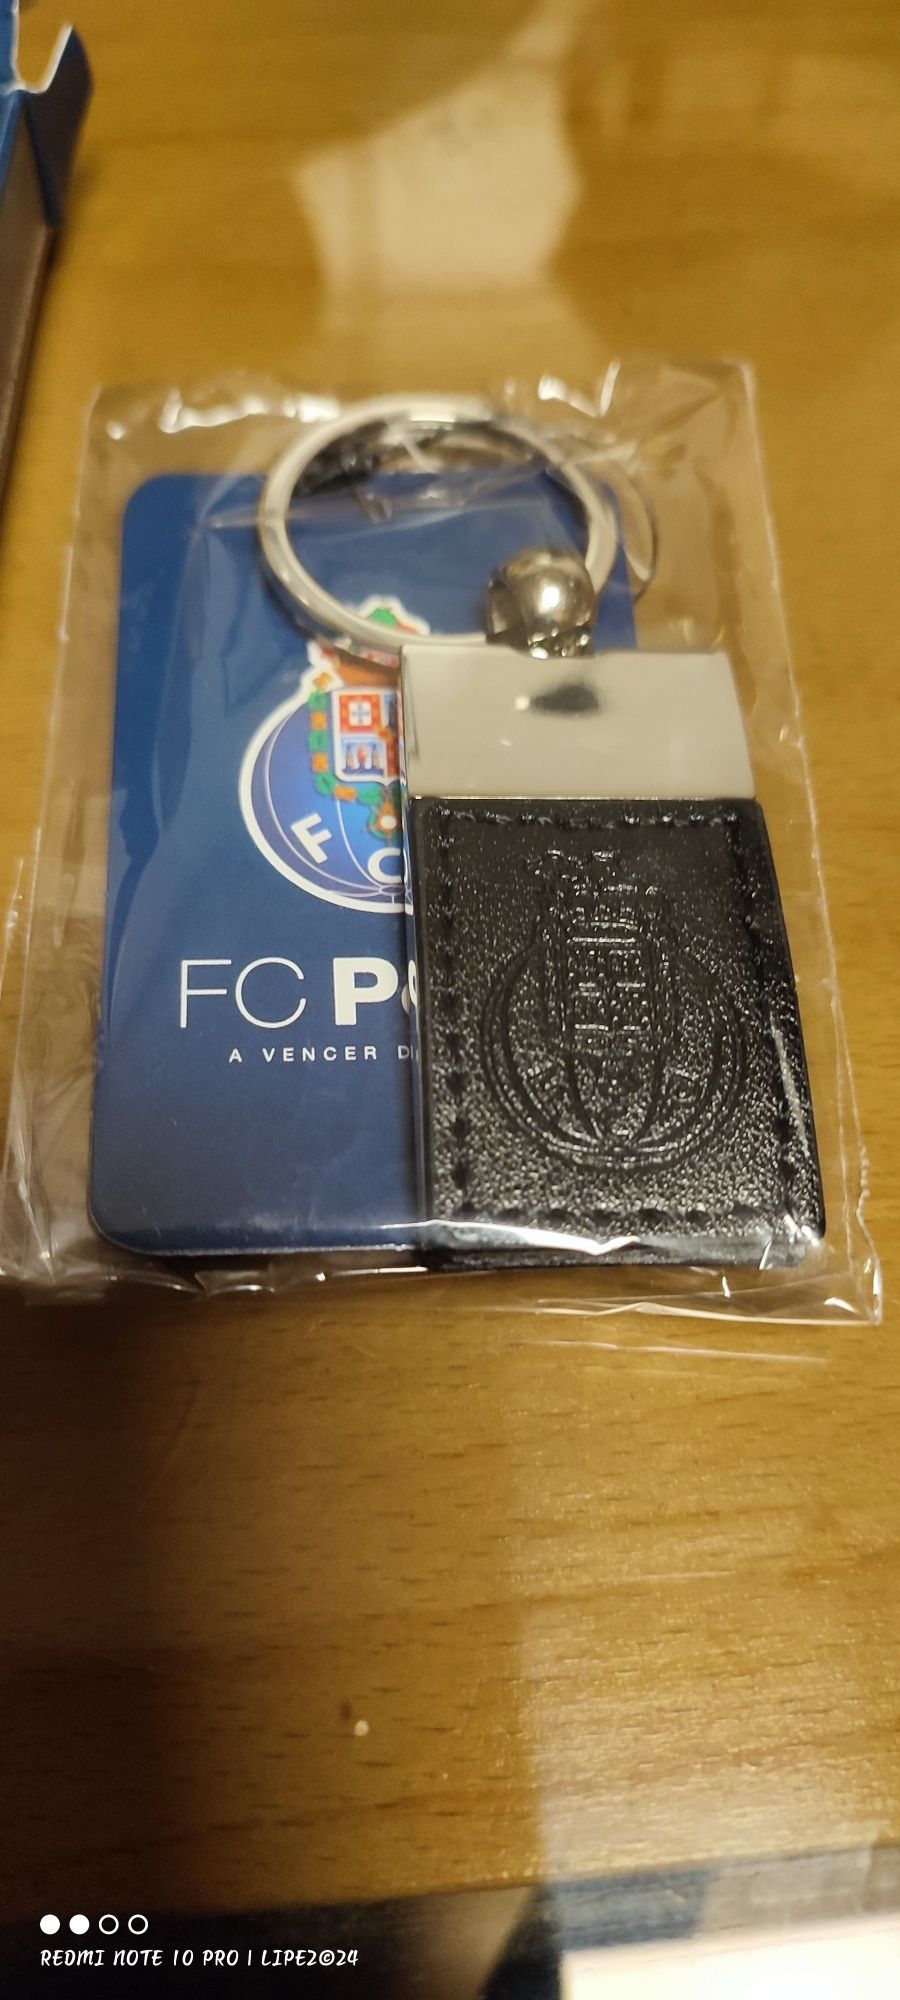 Porta chaves oficial FCPorto
Material: 100% Pele Genuína
Dimensões (Ax